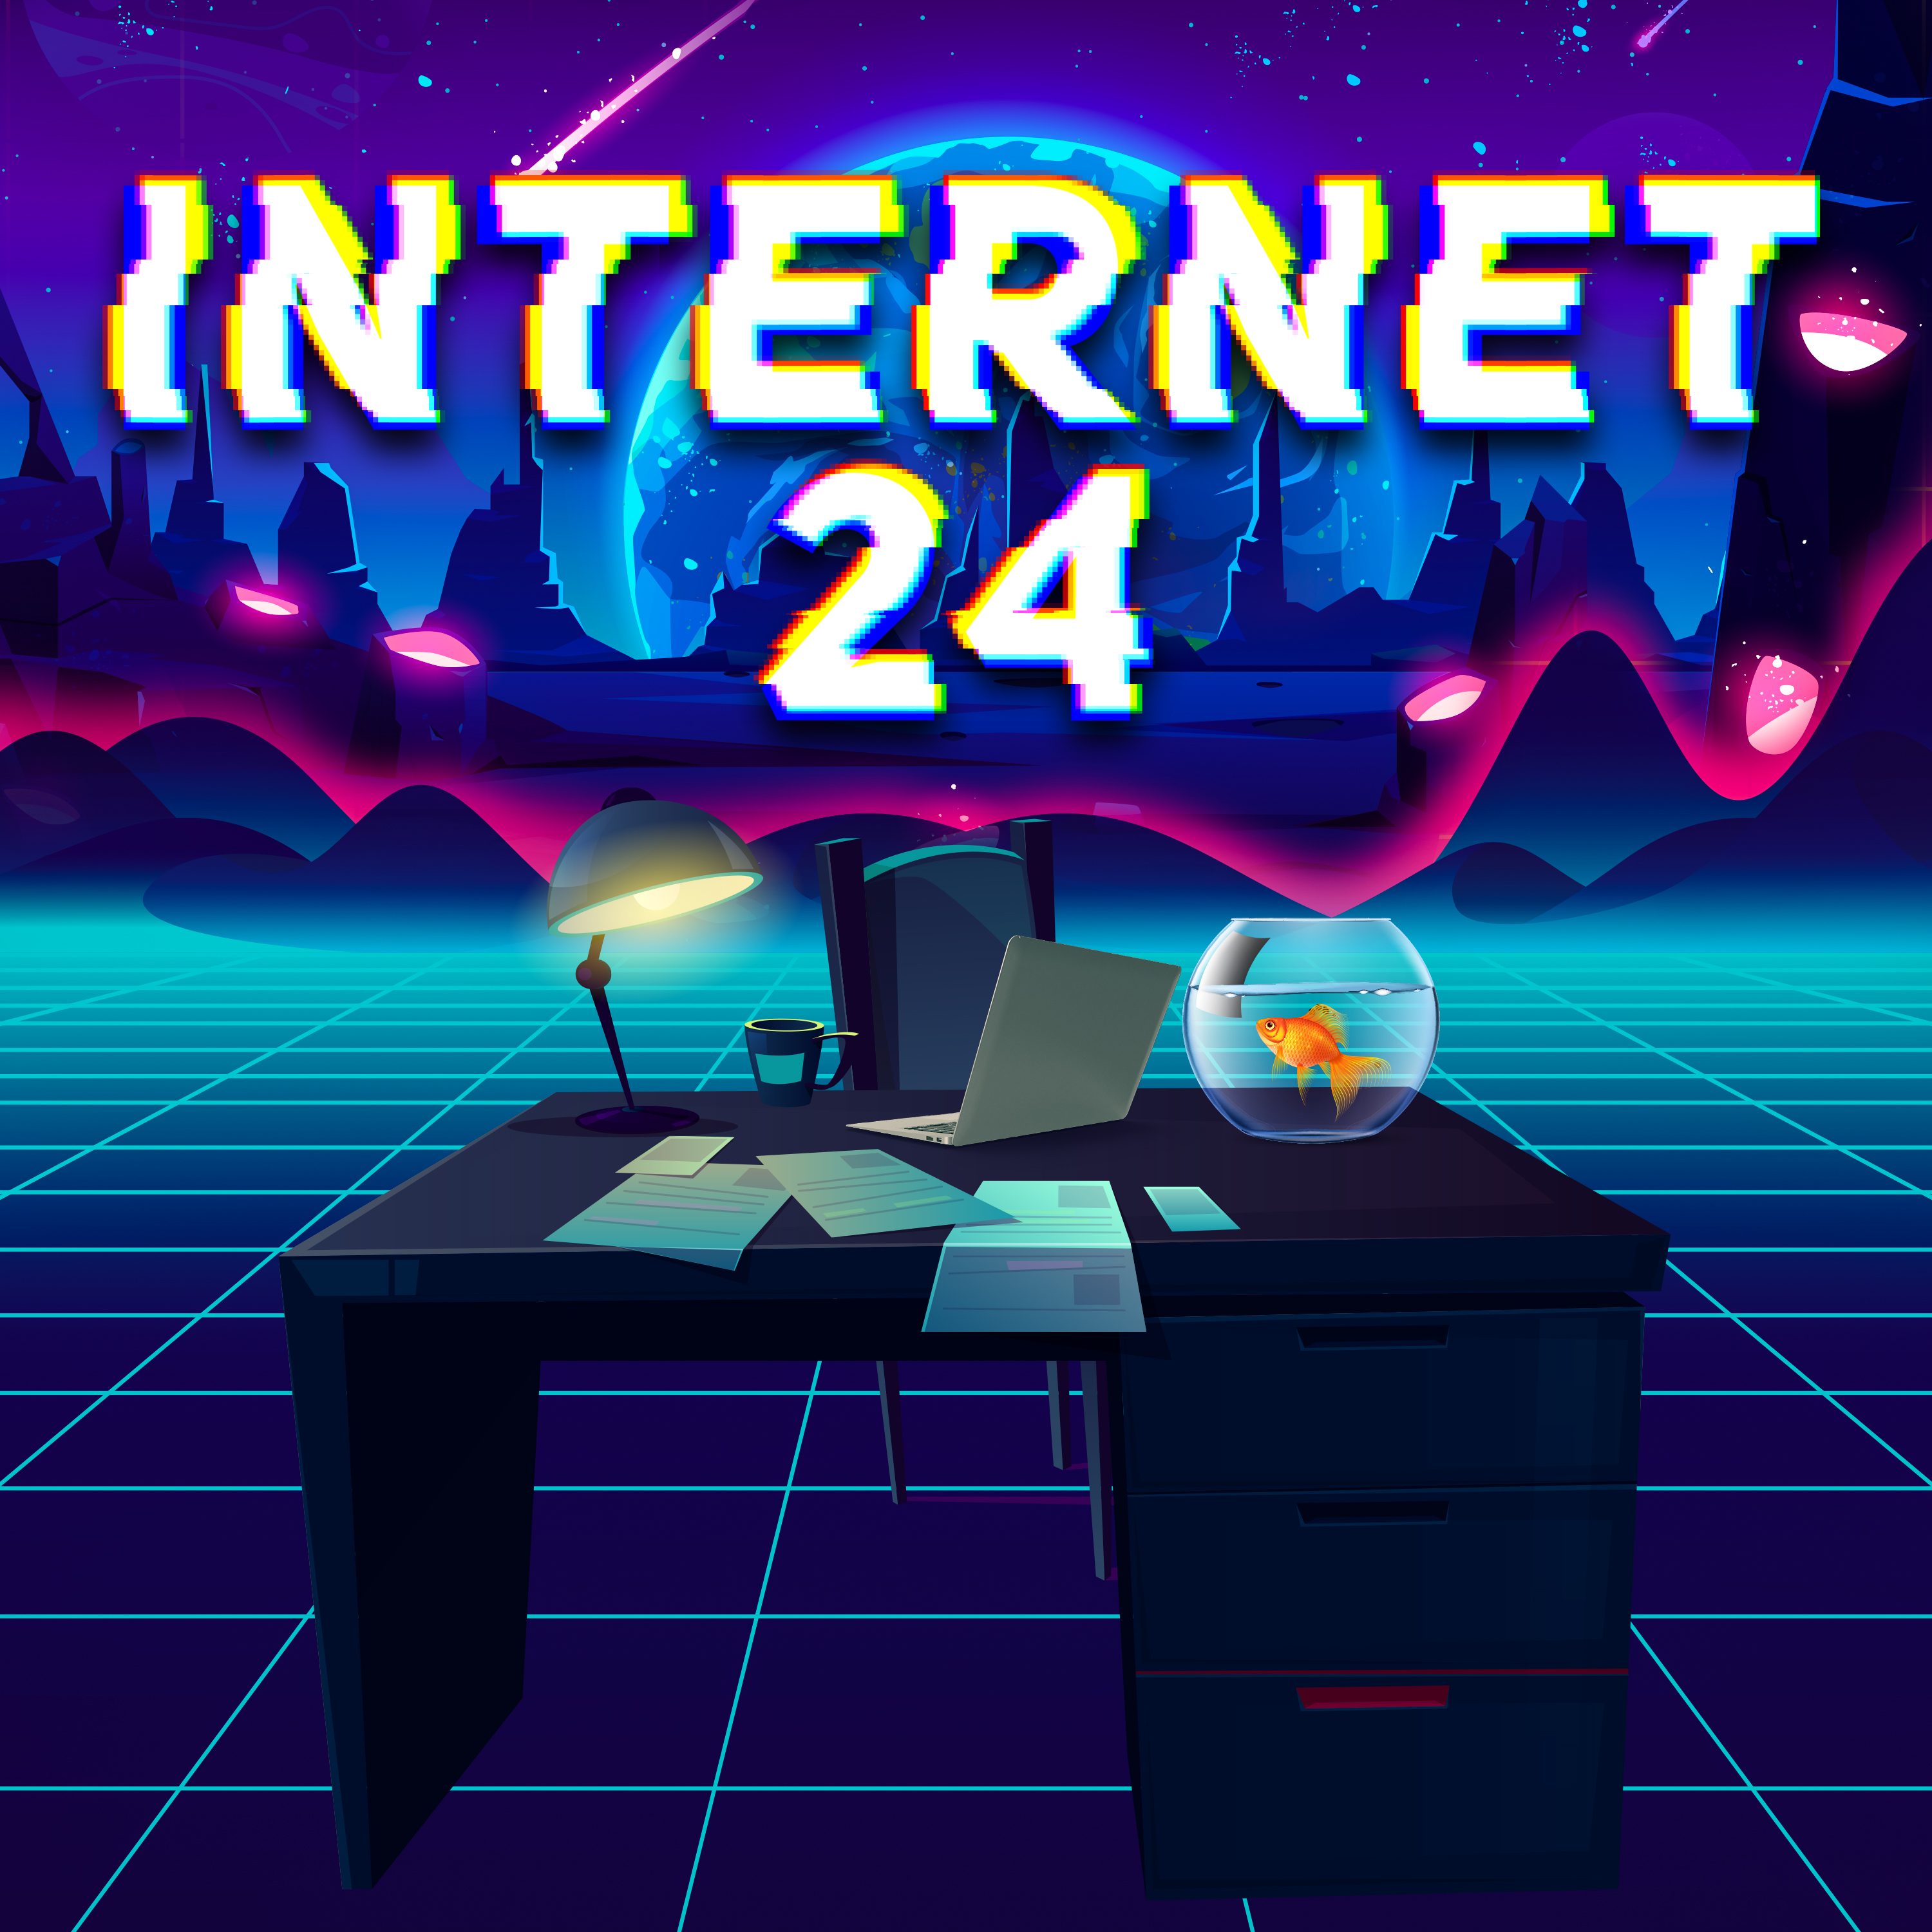 Internet 24